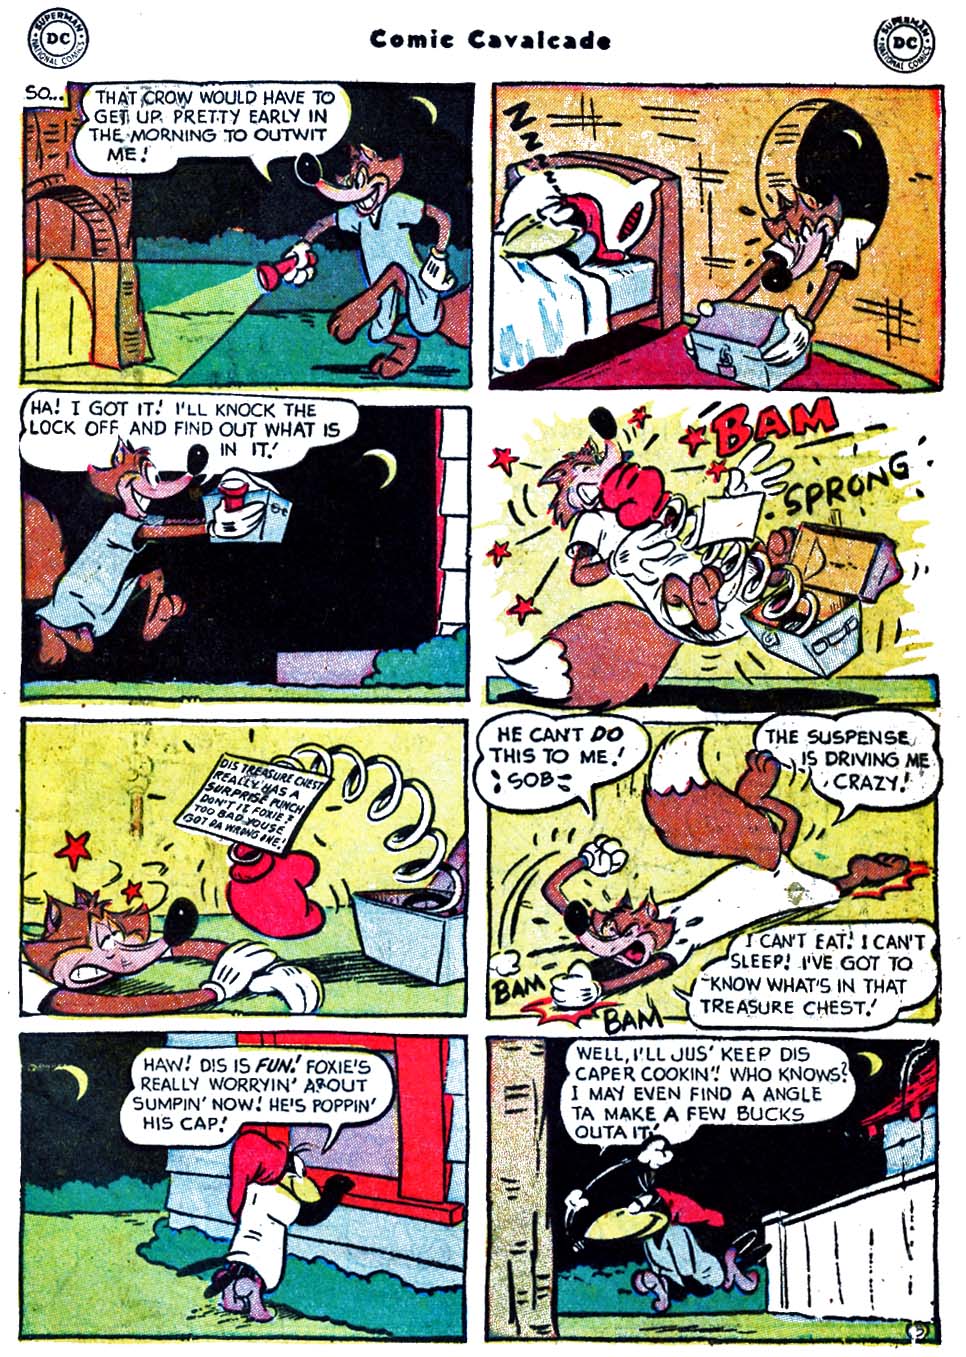 Comic Cavalcade issue 57 - Page 7